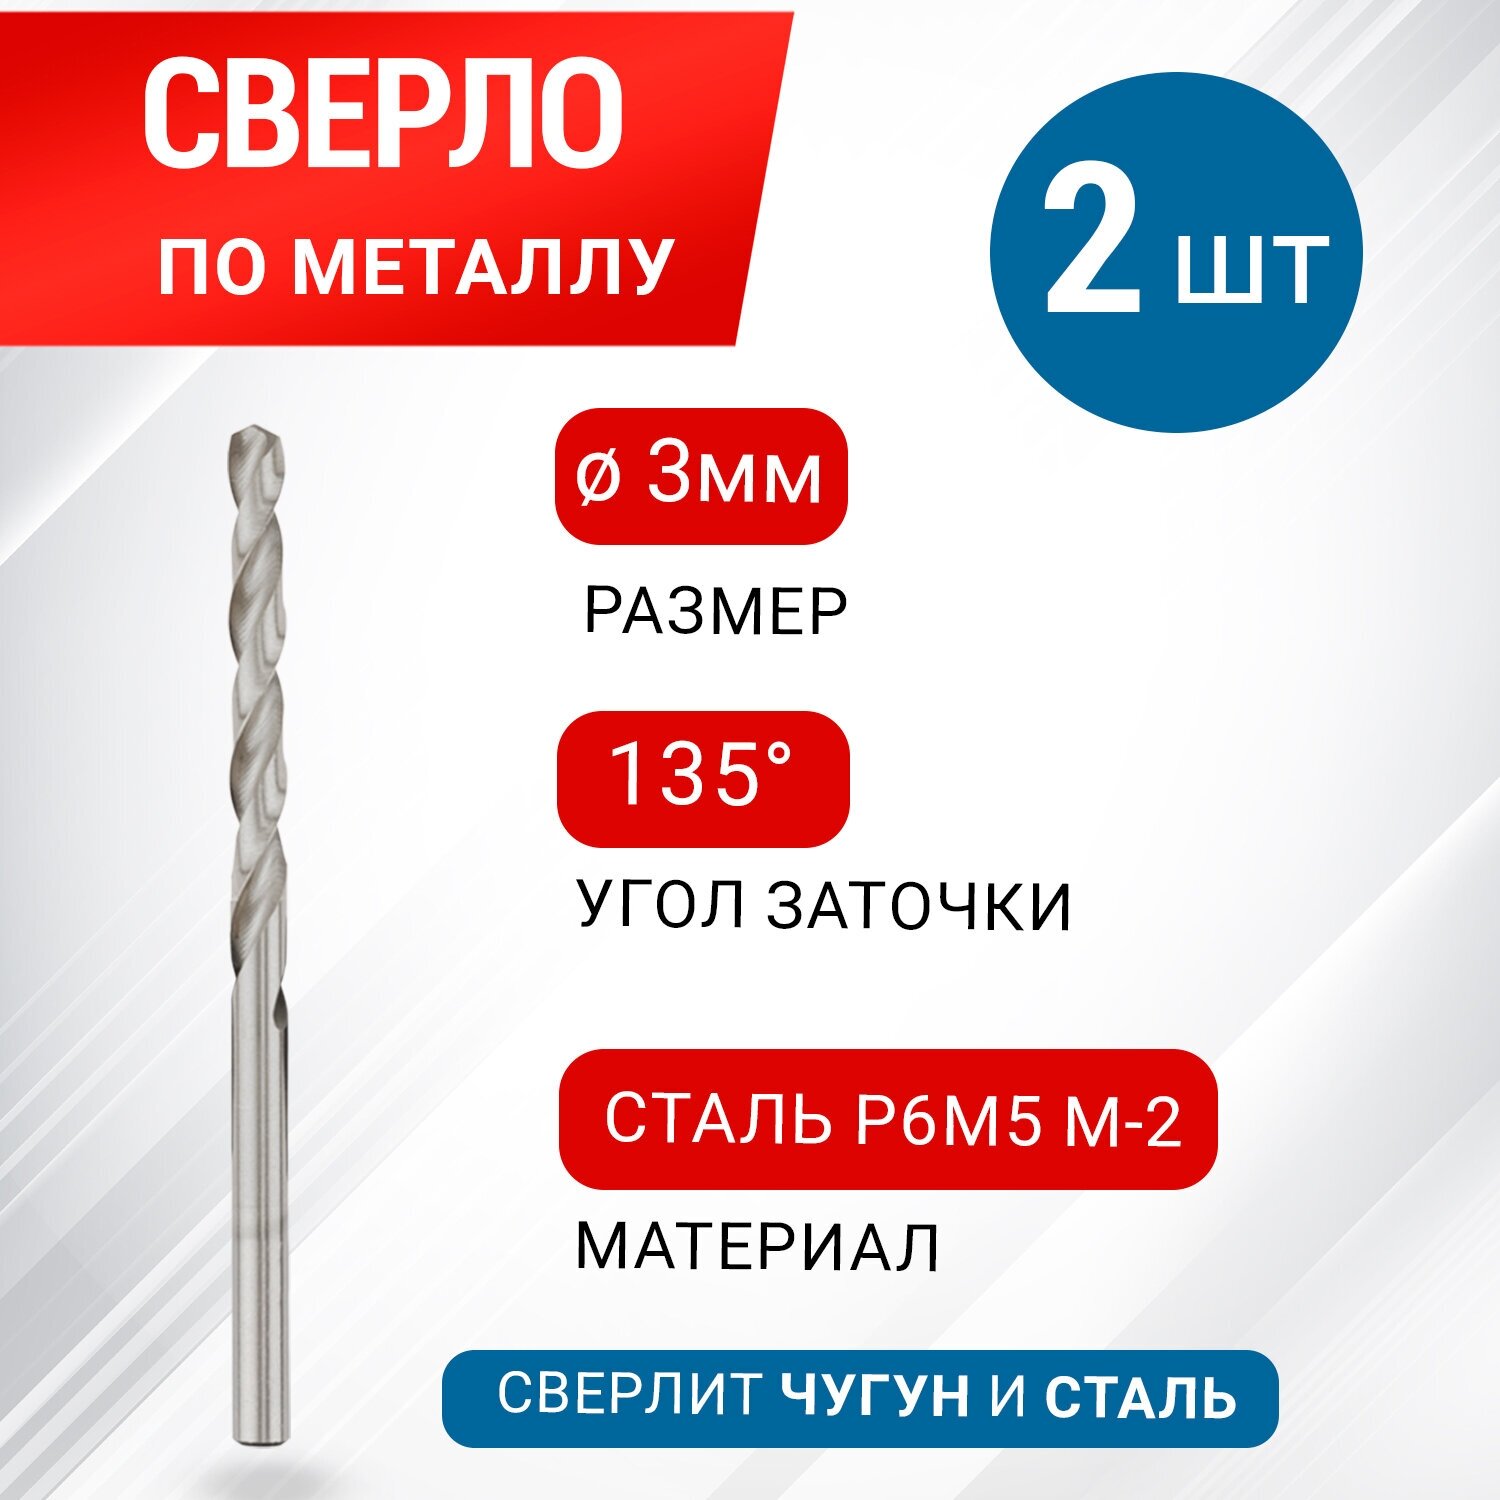 Сверло по металлу 3 мм "Стандарт+": сталь P6M5 (М-2), 2 шт в упаковке